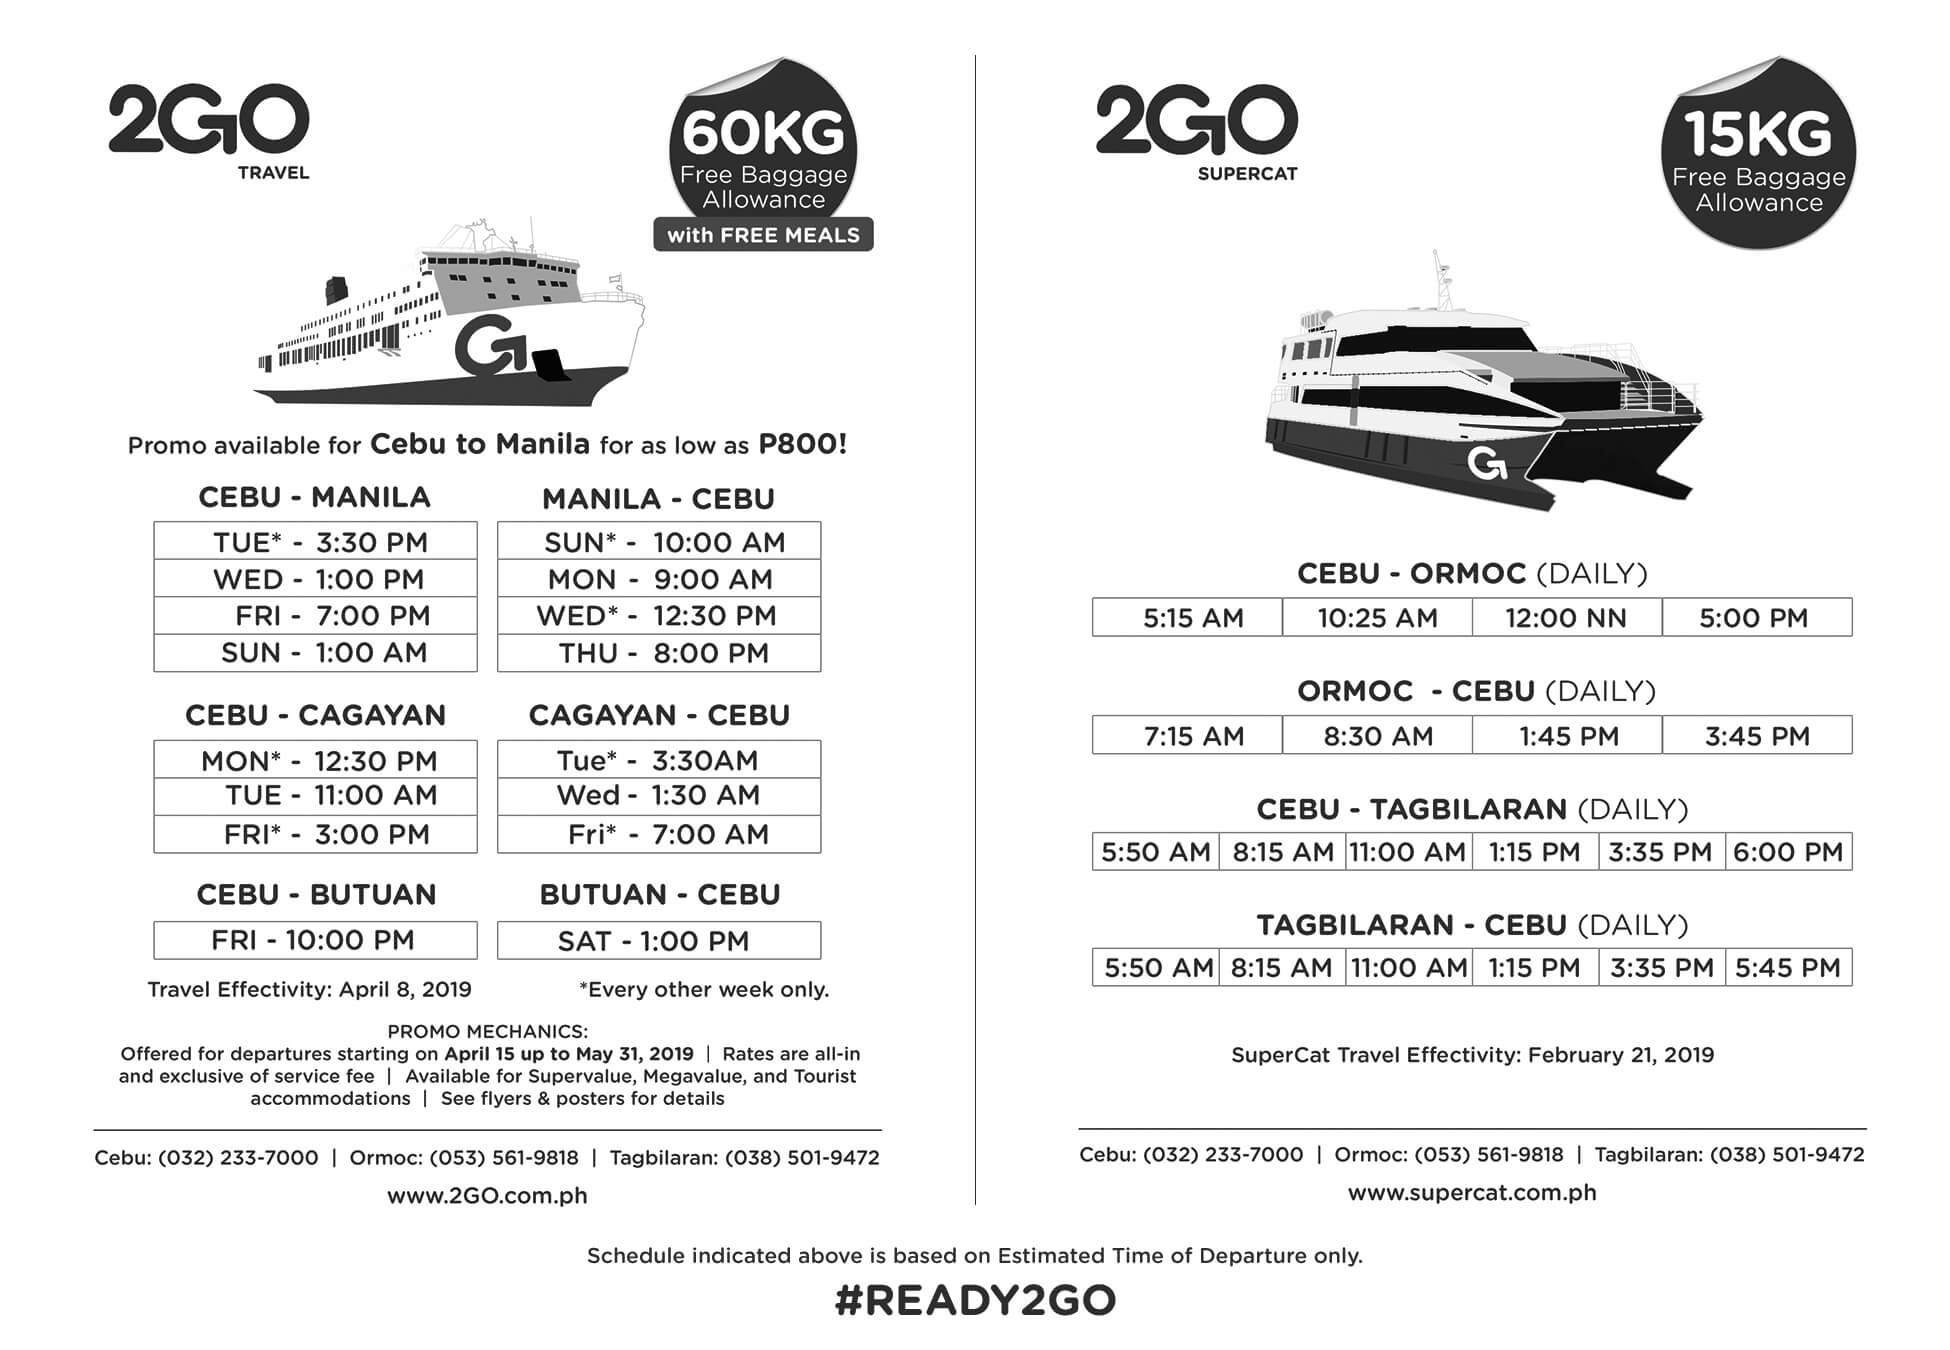 2Go Travel and 2Go Supercat schedules Cebu